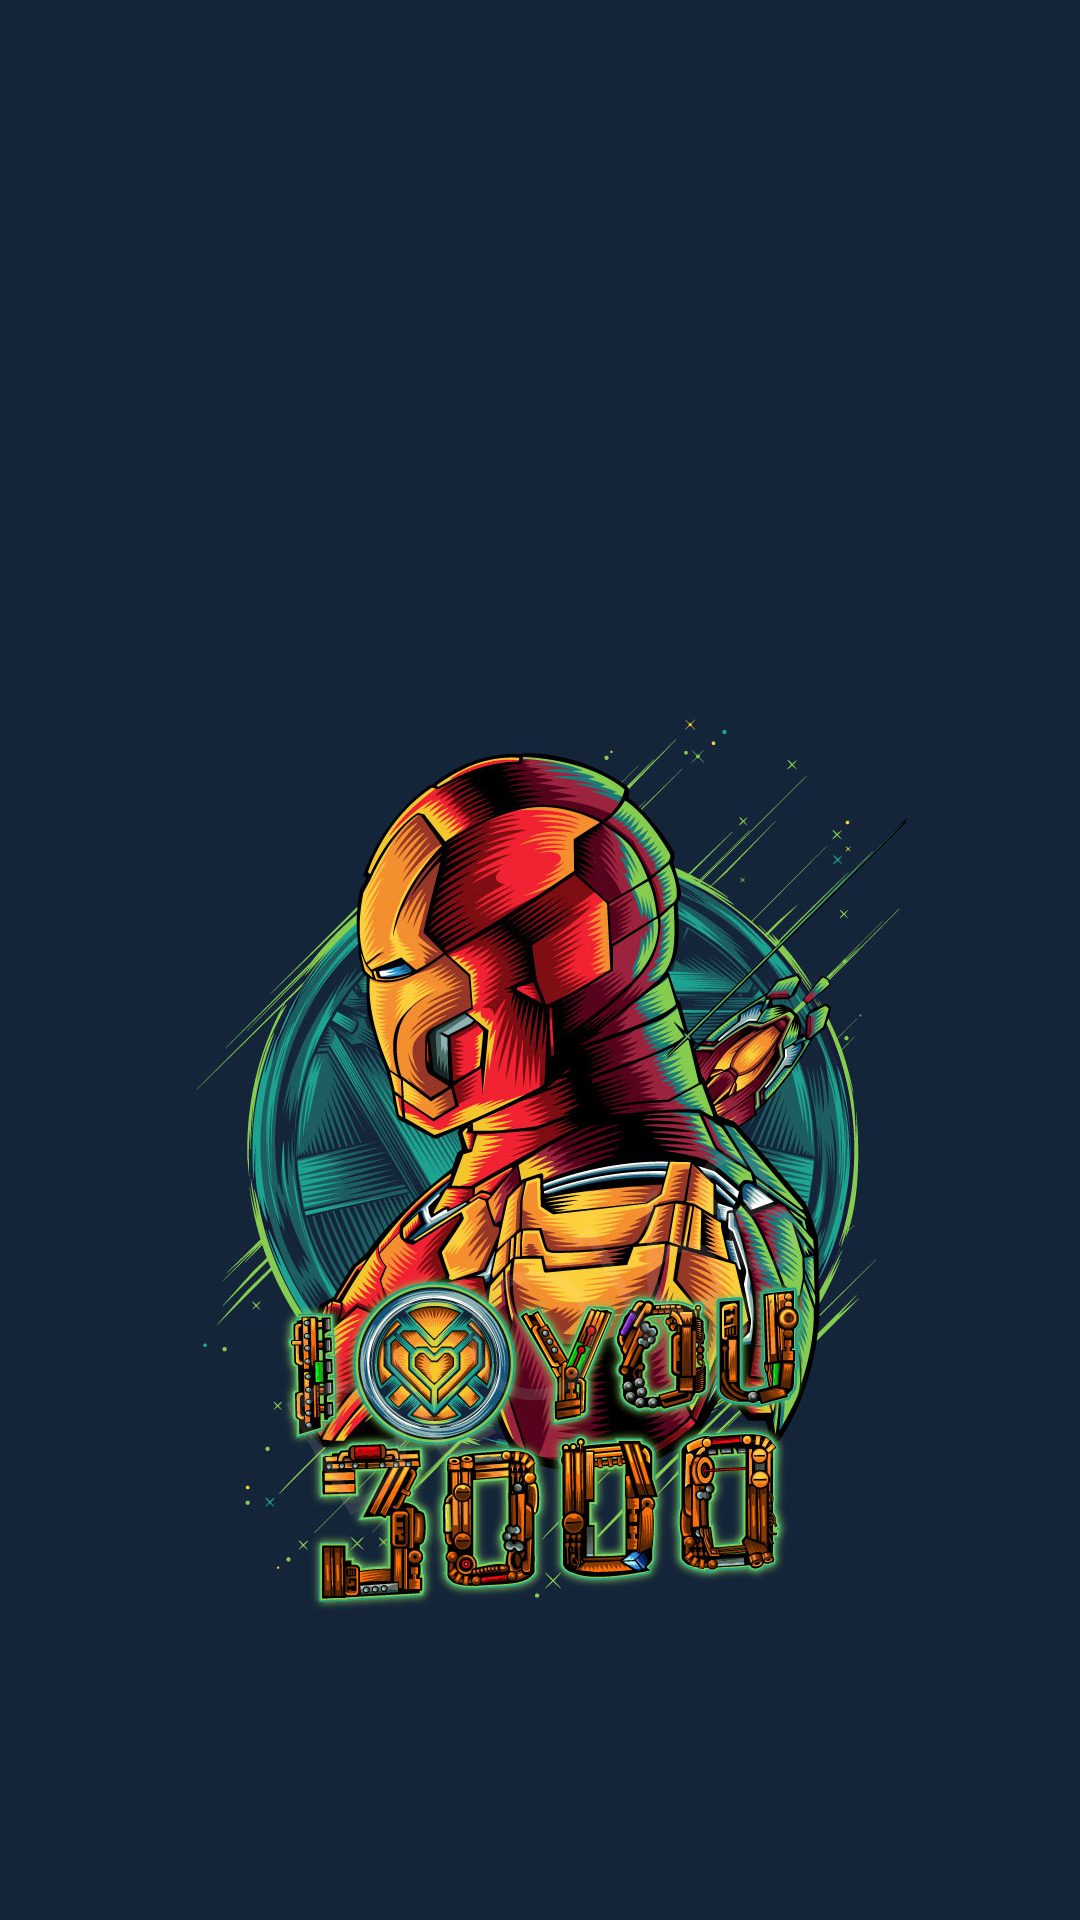 Iron Man Iron Man 2 Iron Man 3 Avengers Endgame Avengers Infinity War Avengers Age Of Ultron The Ave 1080x1920